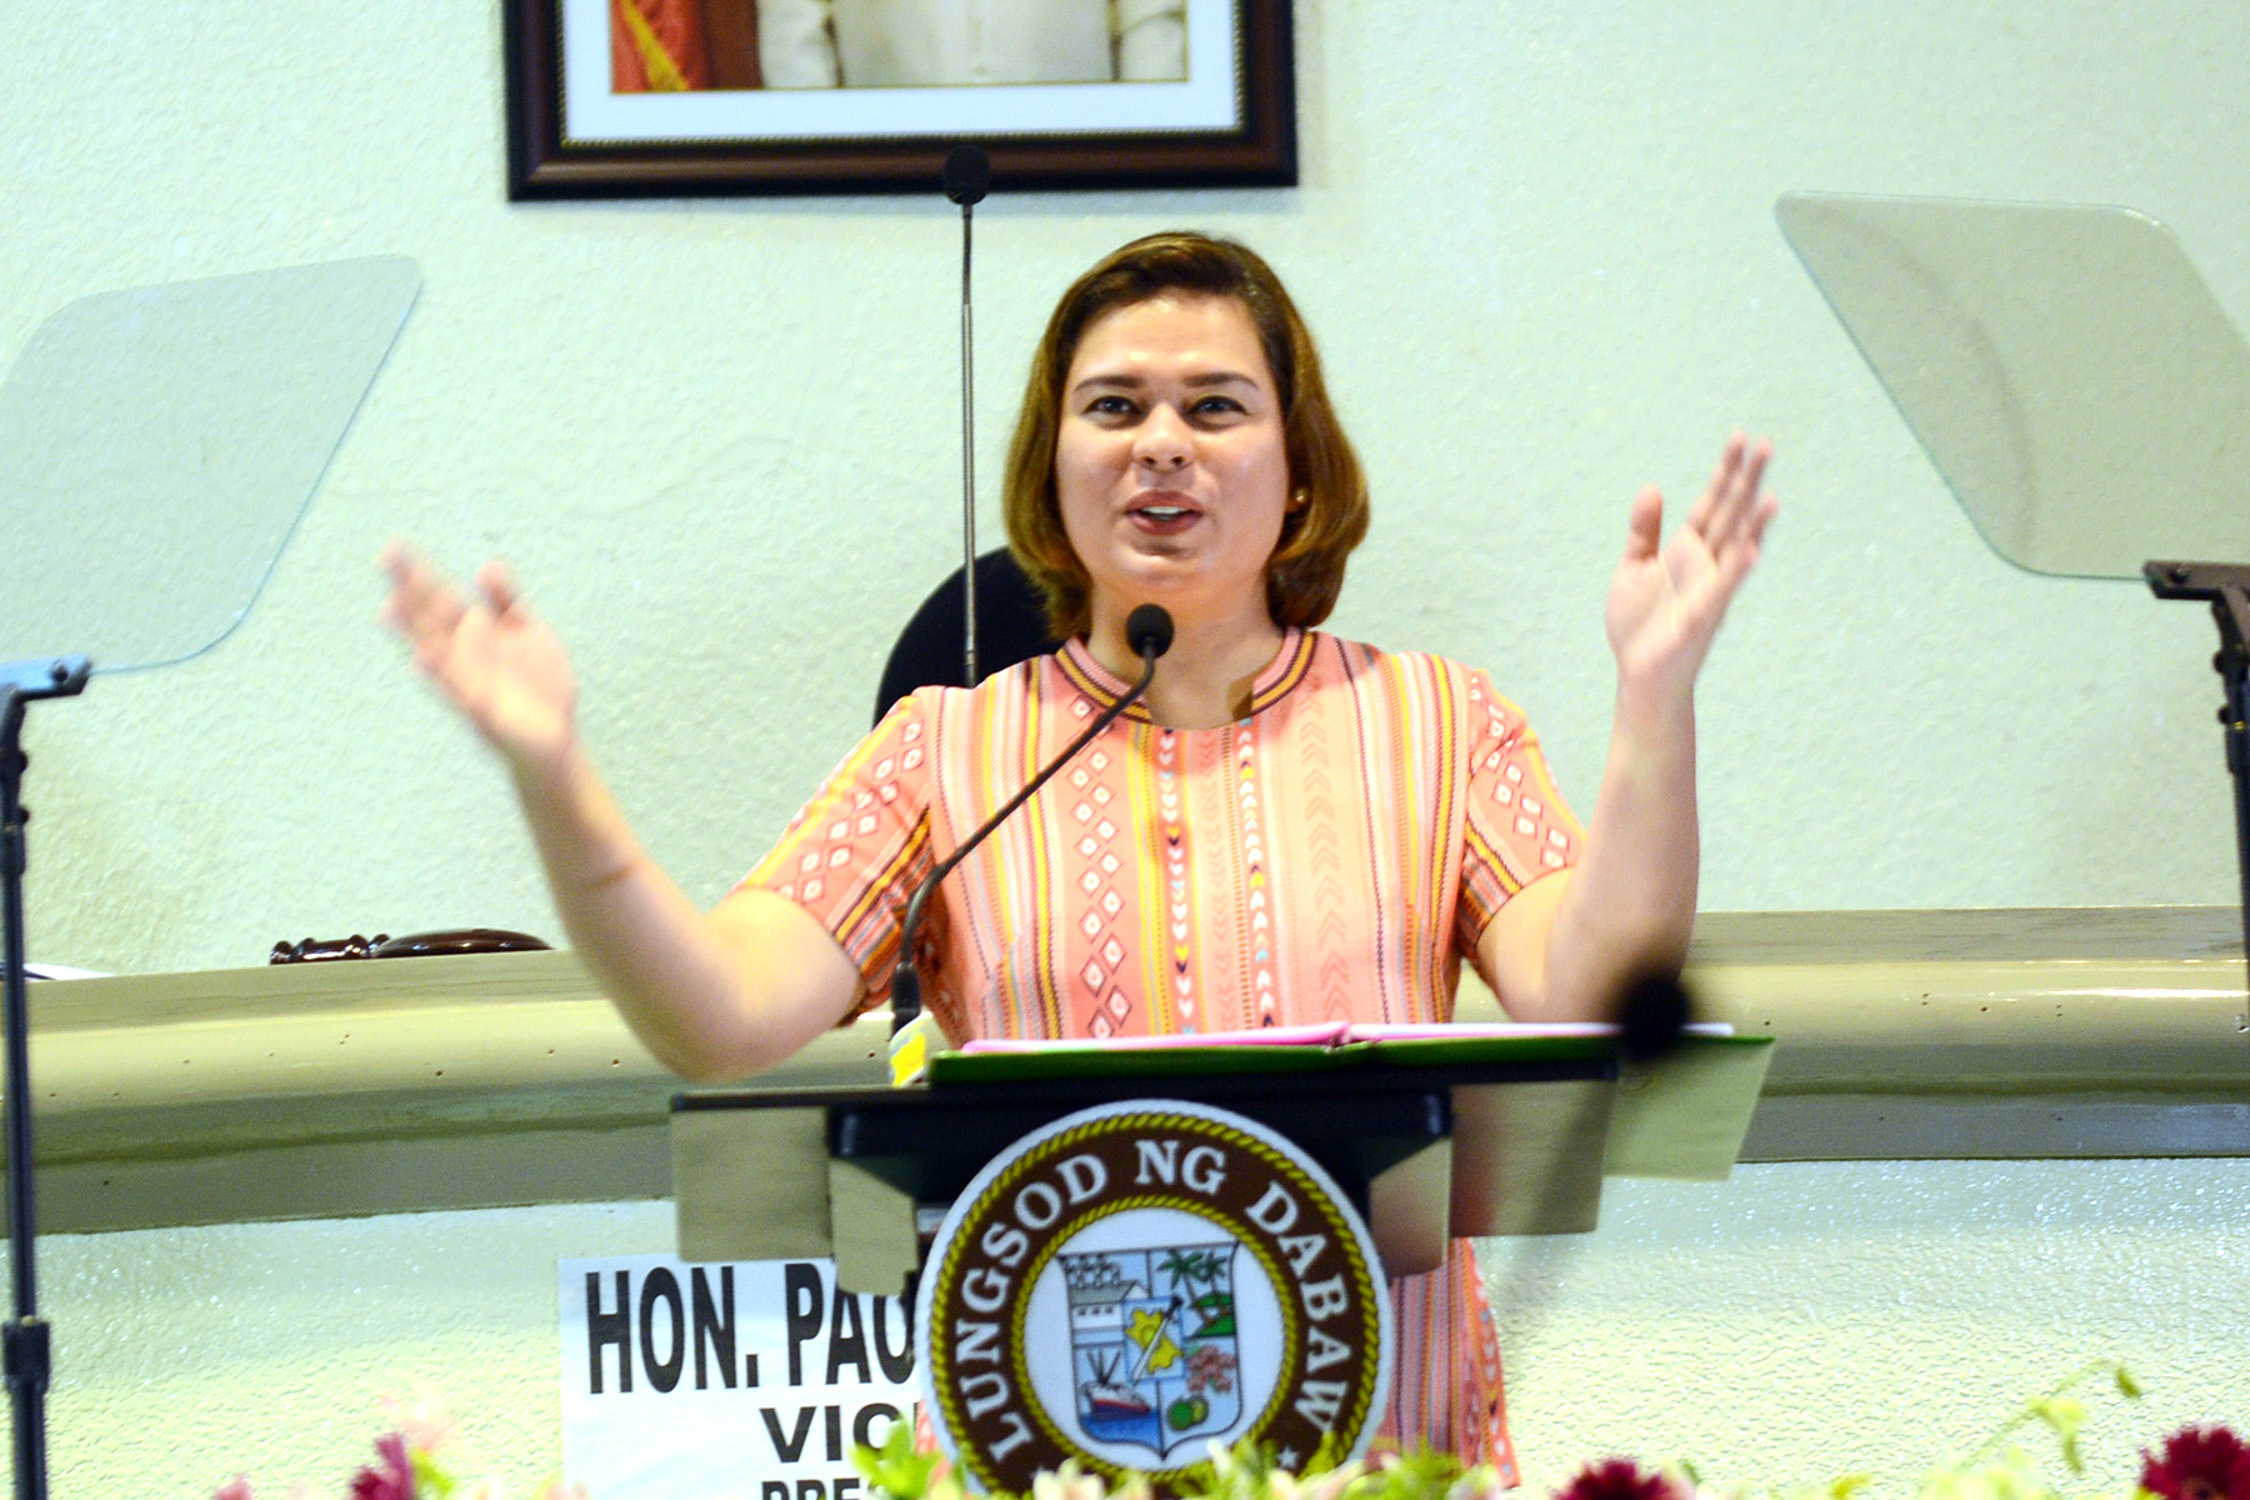 Sara’s secret funds as Davaomayor also draw scrutiny